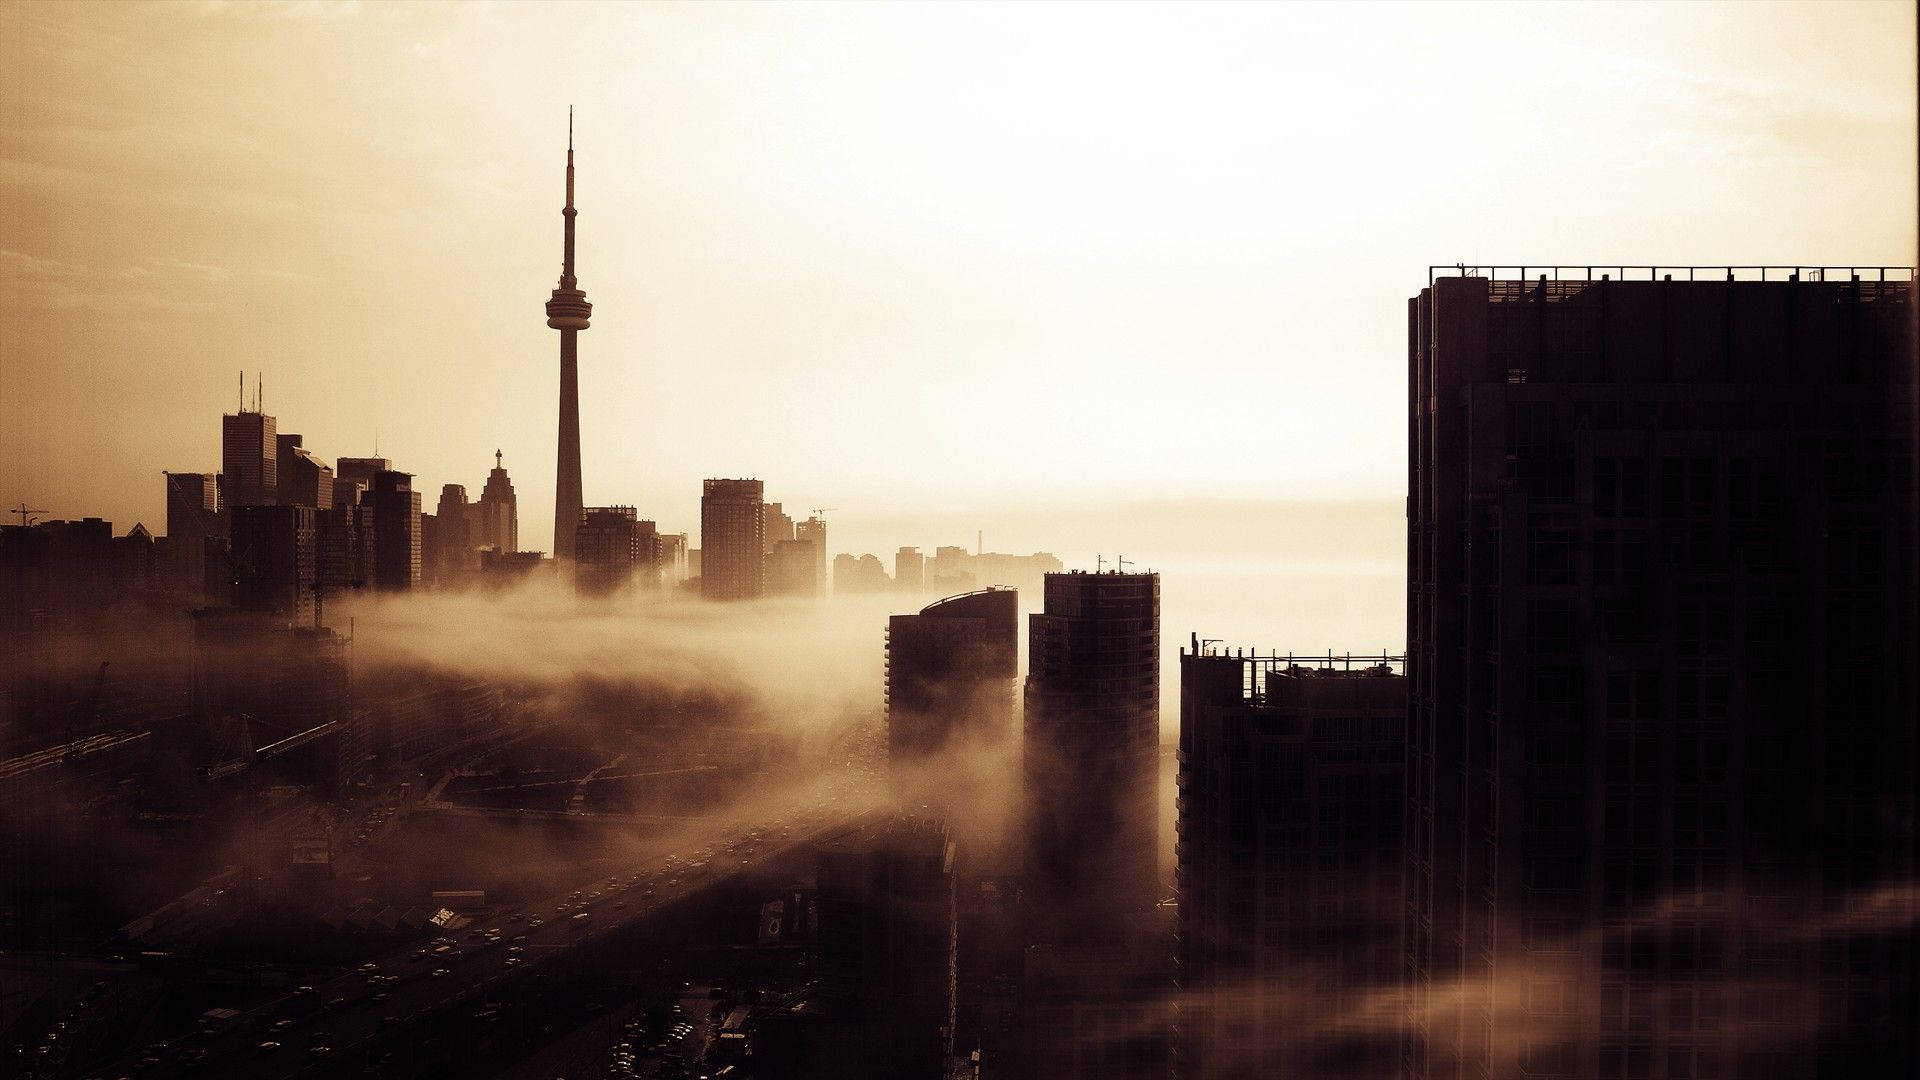 Toronto In A Smoky Scene